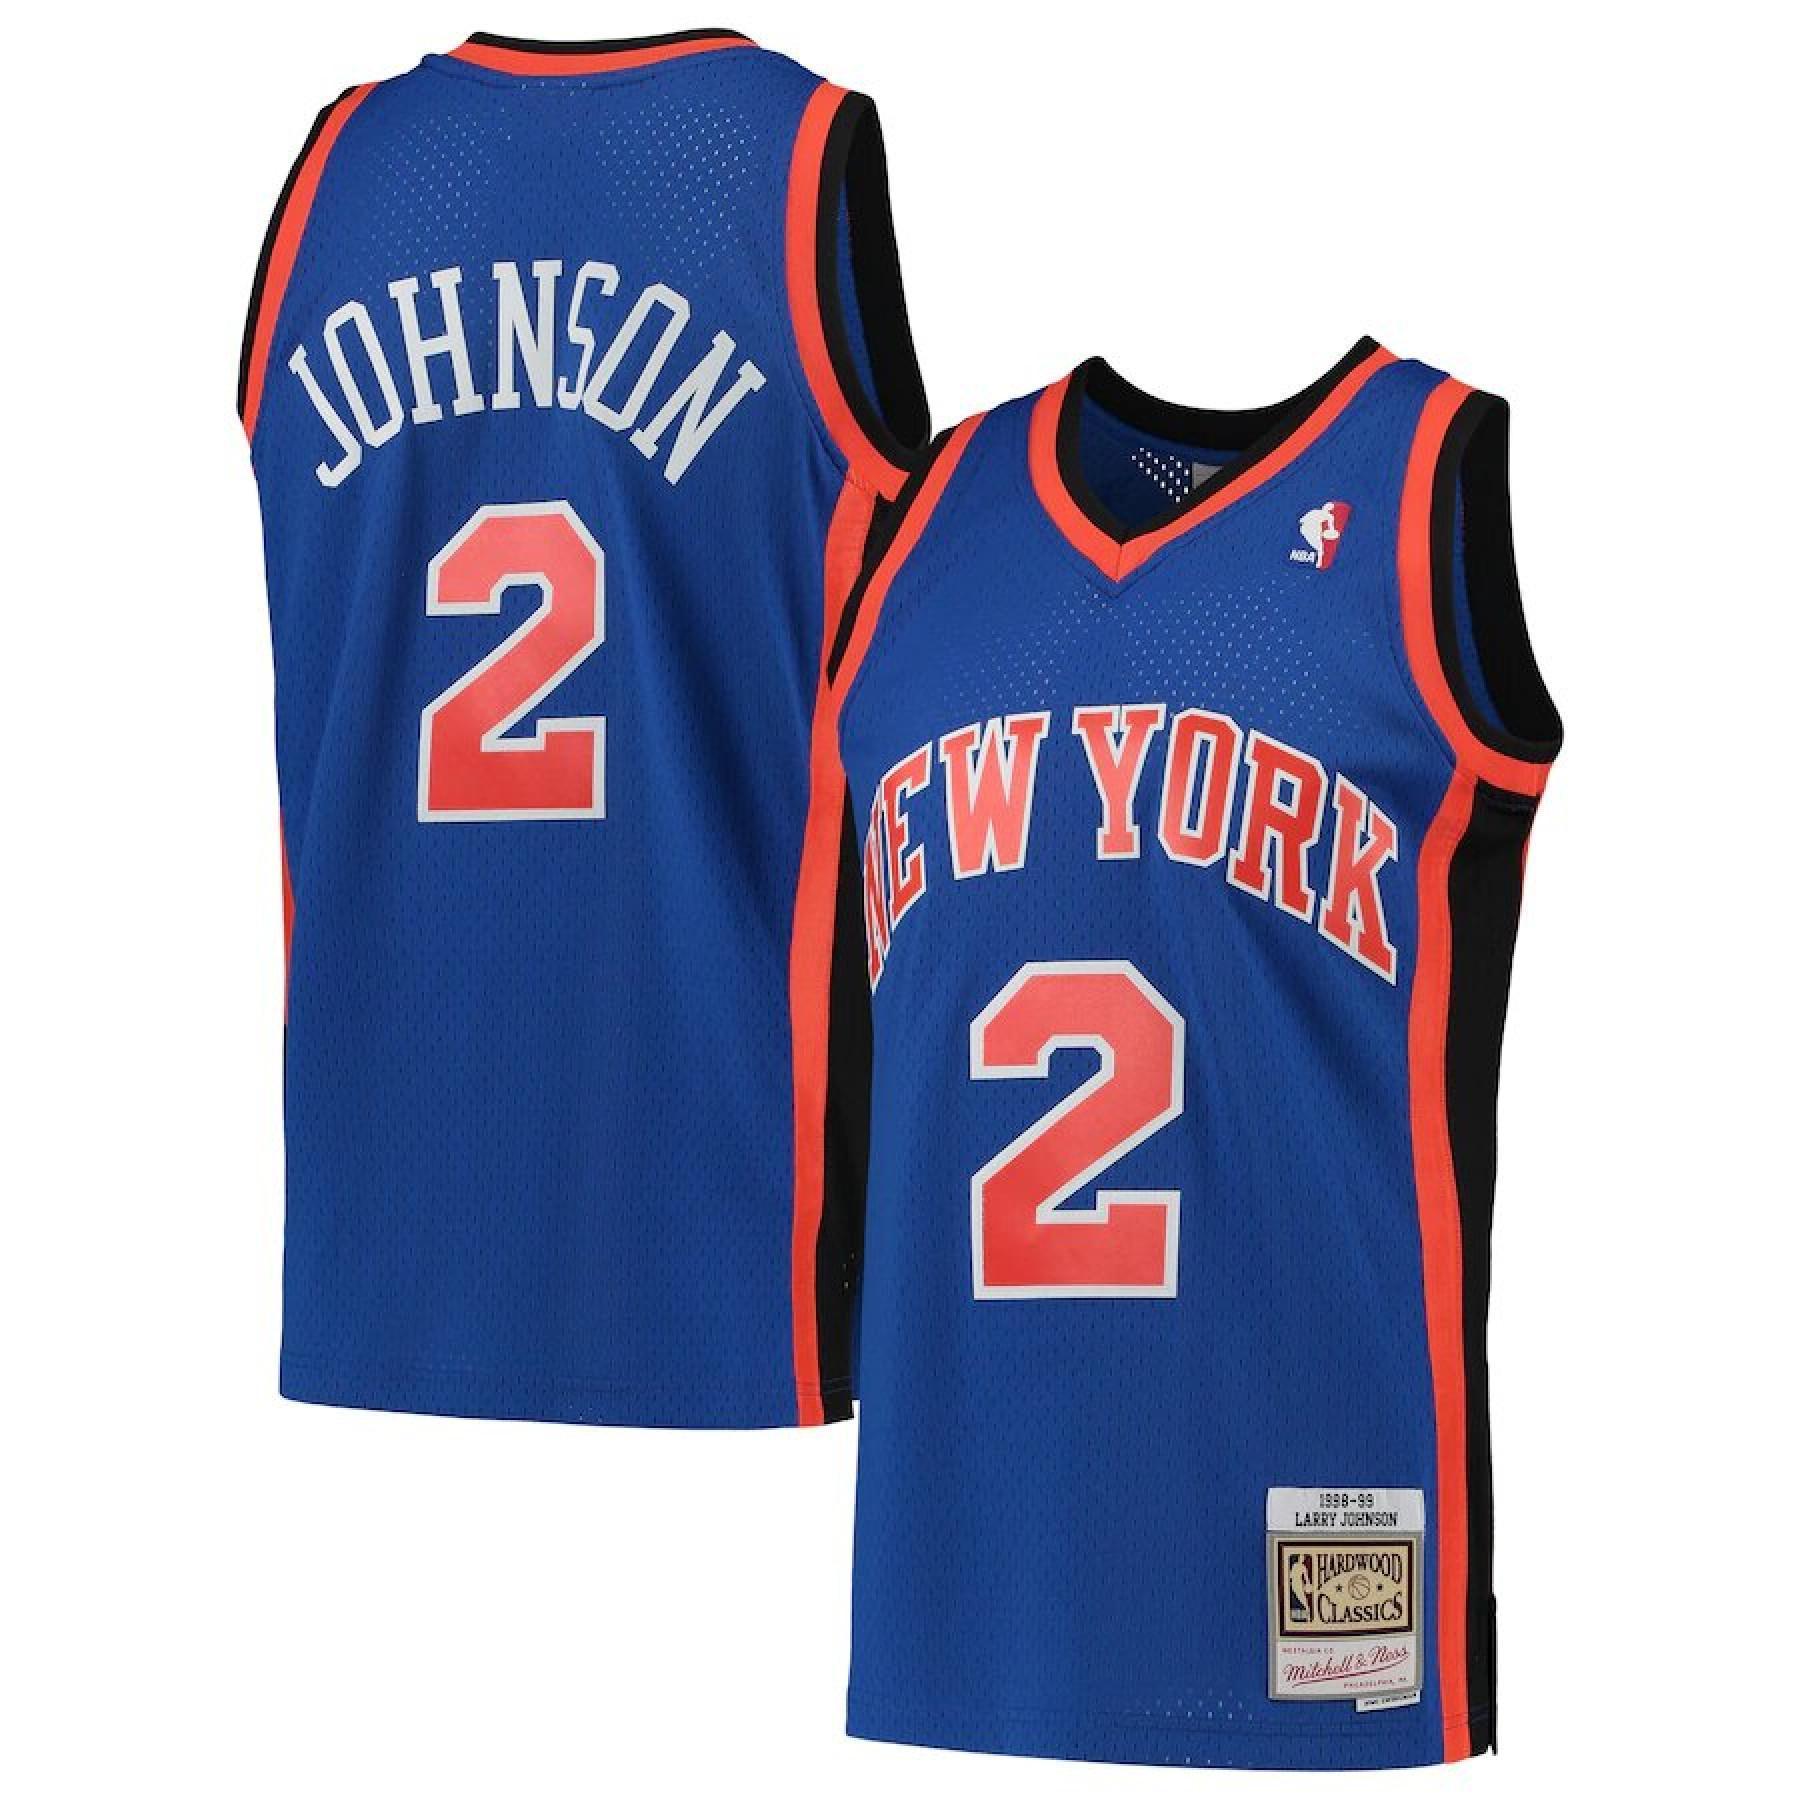 Maillot New York Knicks nba - Larry Johnson